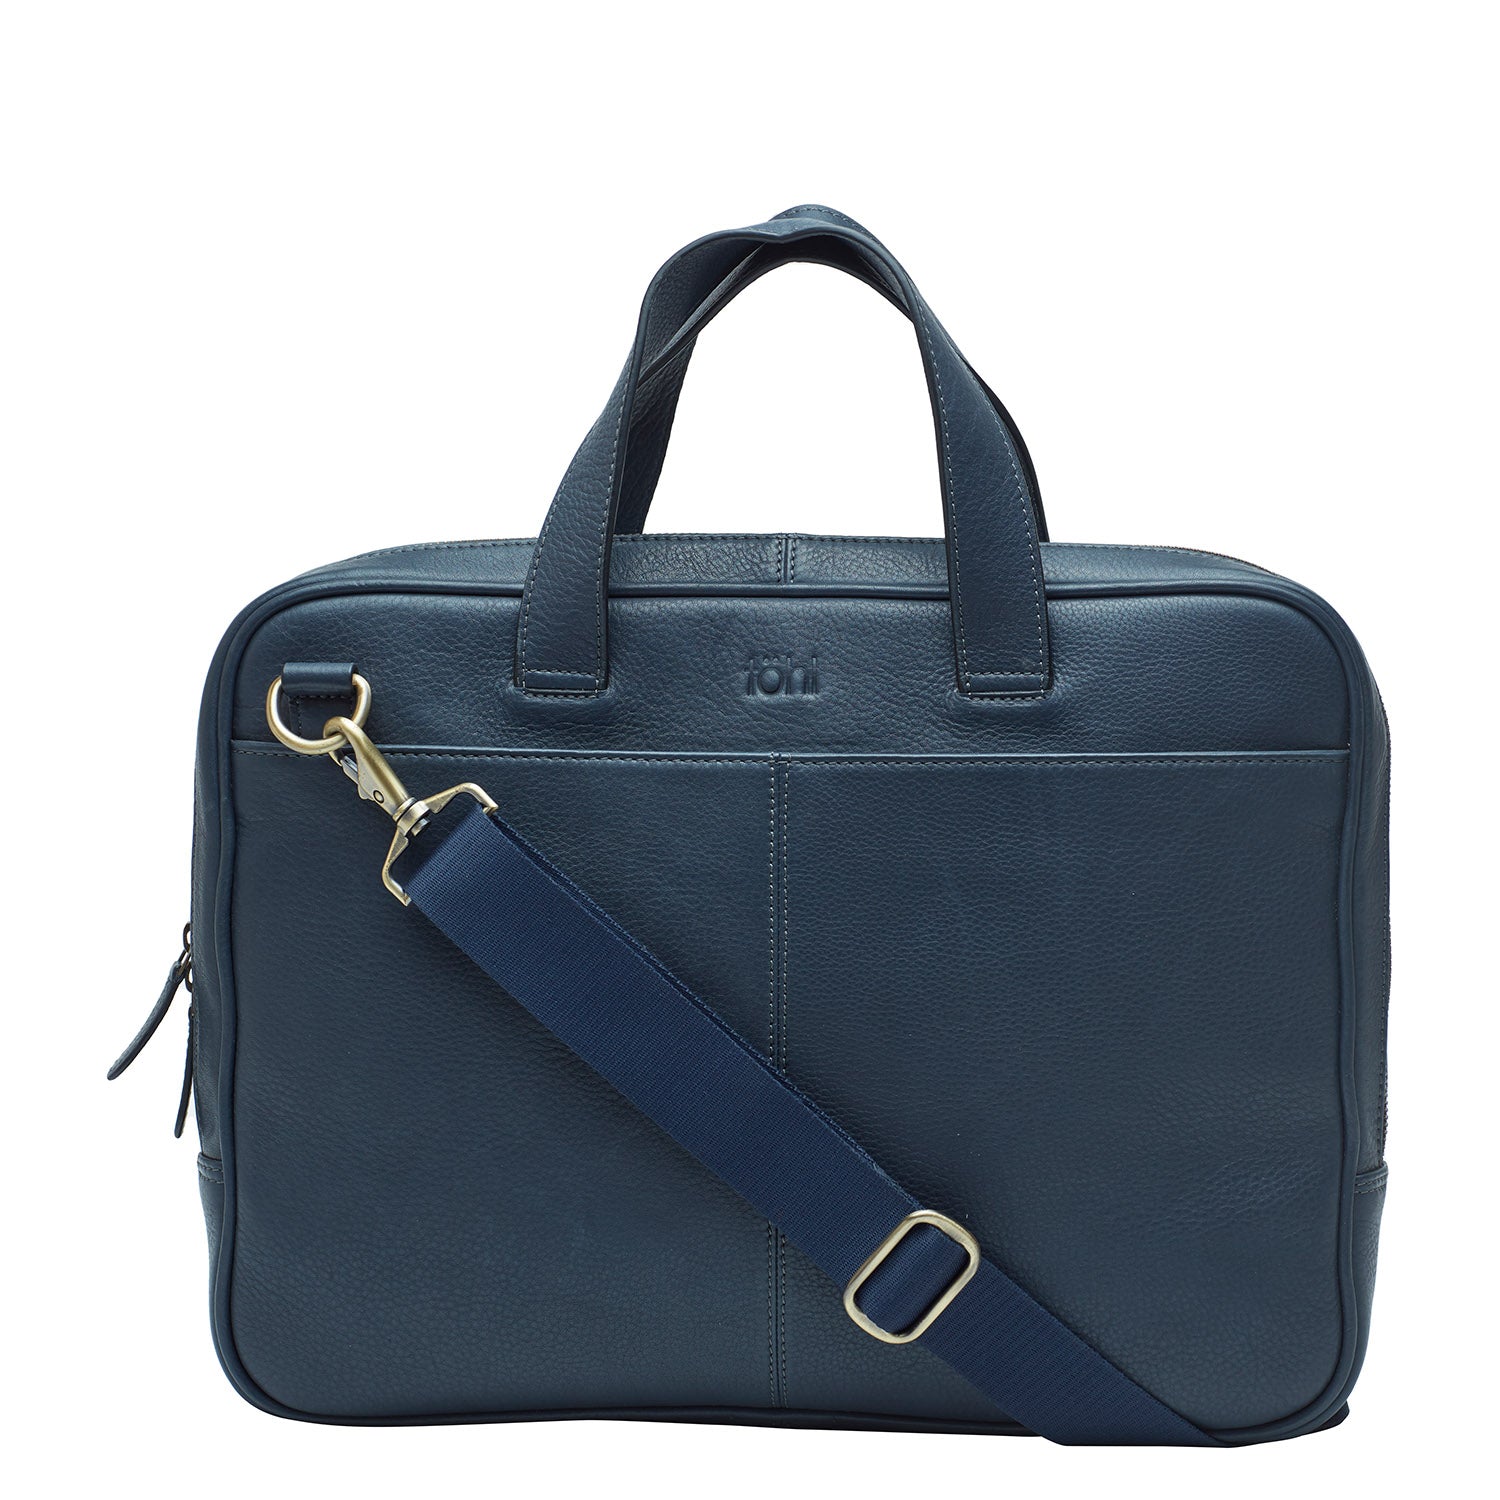 Buy Bellina® Women's Handbag navy blue color Shoulder bag and wallet for  women at Amazon.in